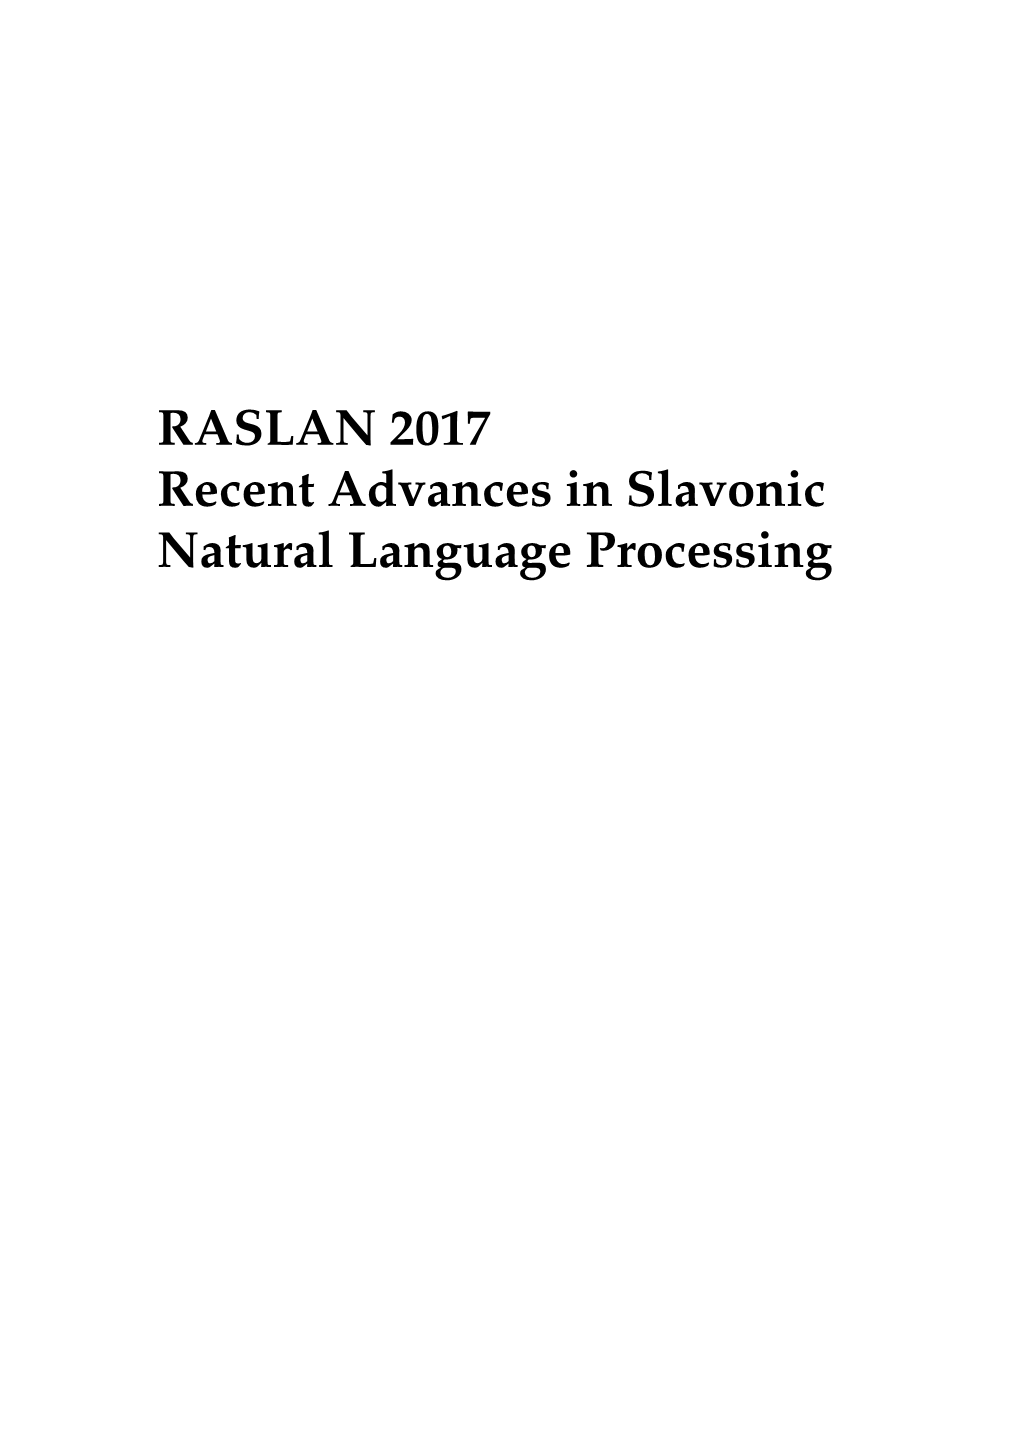 RASLAN 2017 Recent Advances in Slavonic Natural Language Processing